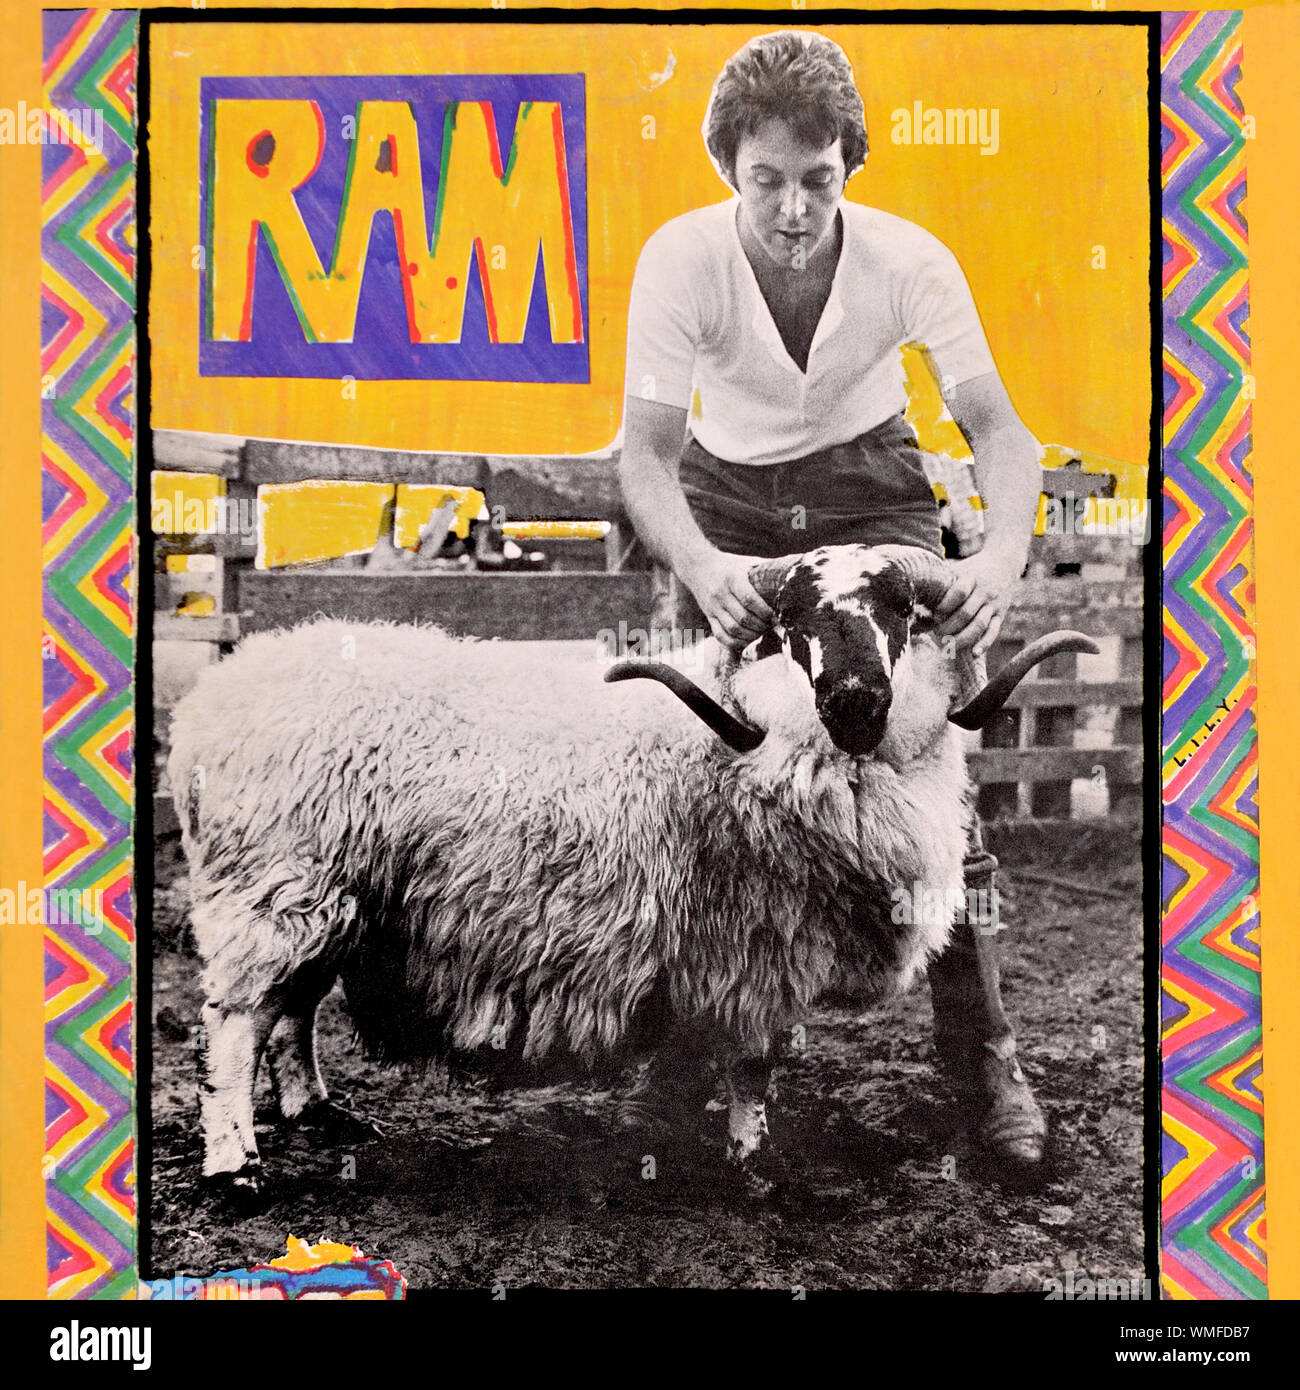 Paul McCartney  Linda McCartney - original vinyl album cover - Ram - 1971 Stock Photo